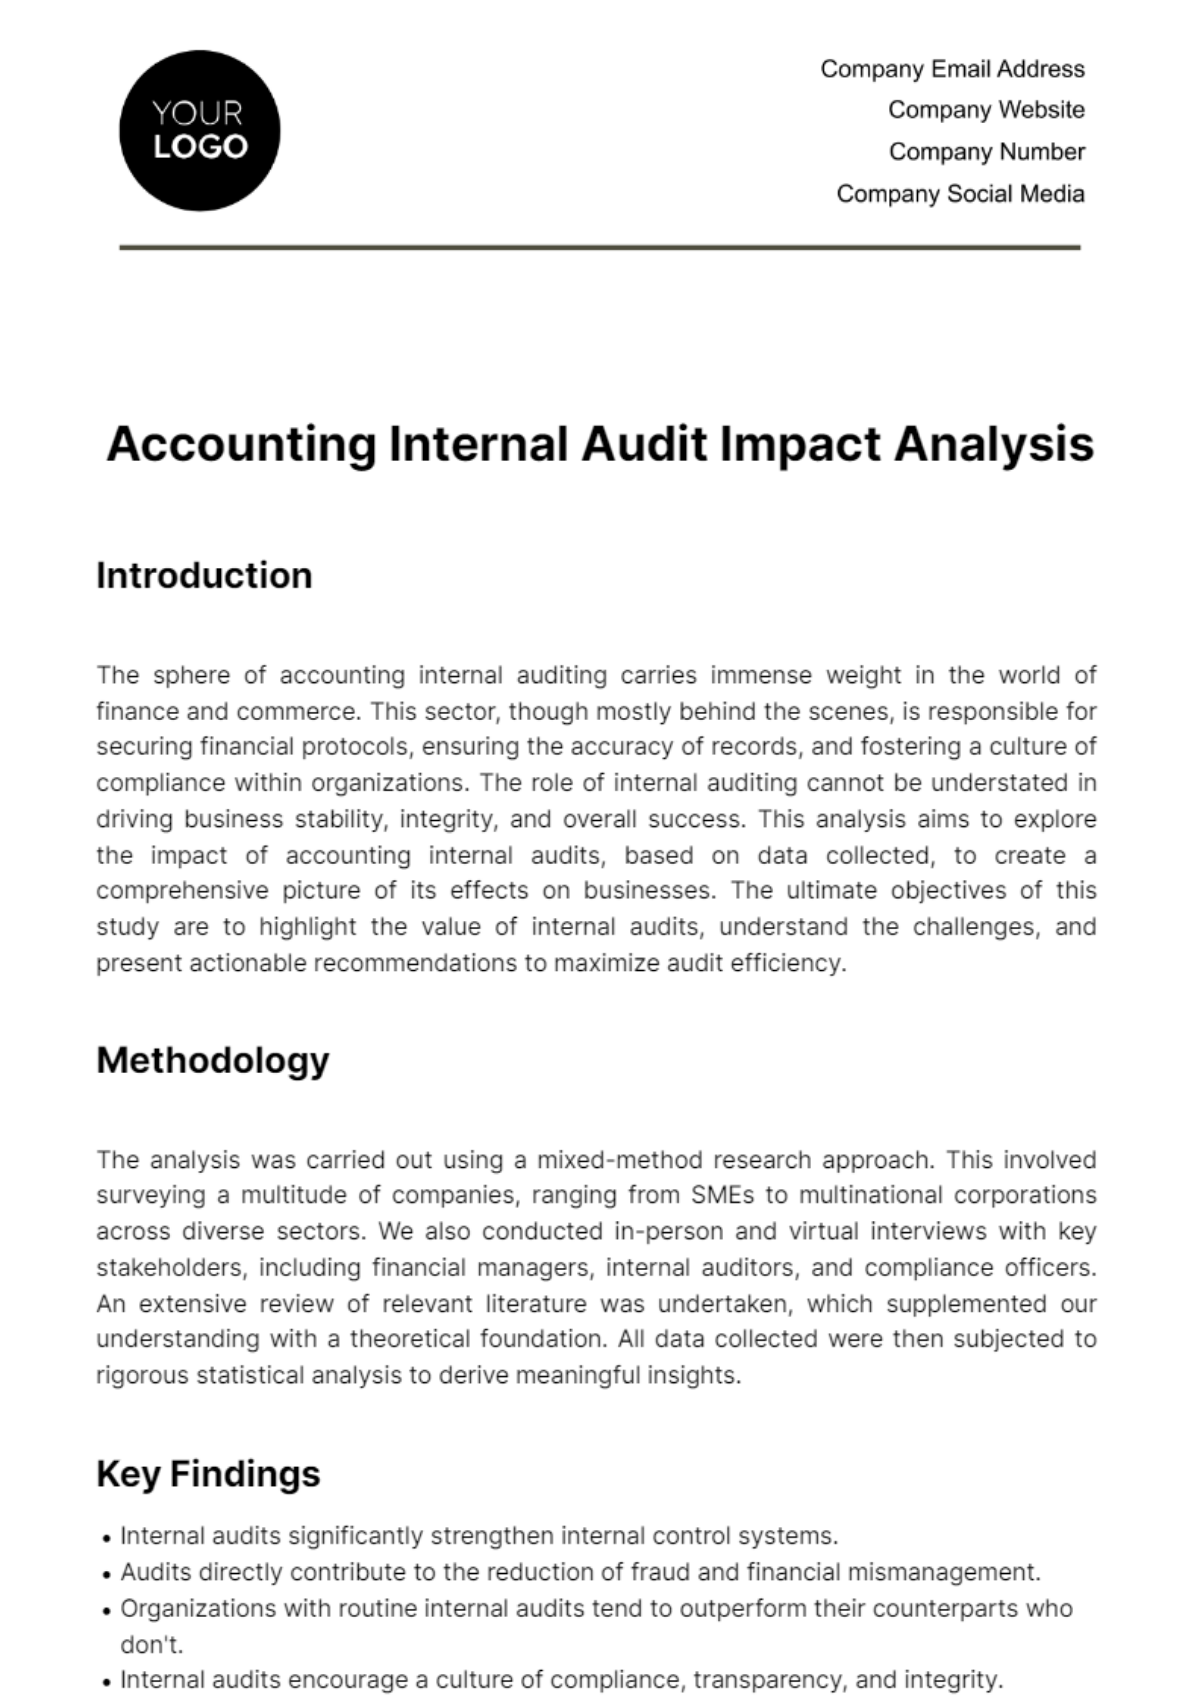 Free Accounting Internal Audit Impact Analysis Template